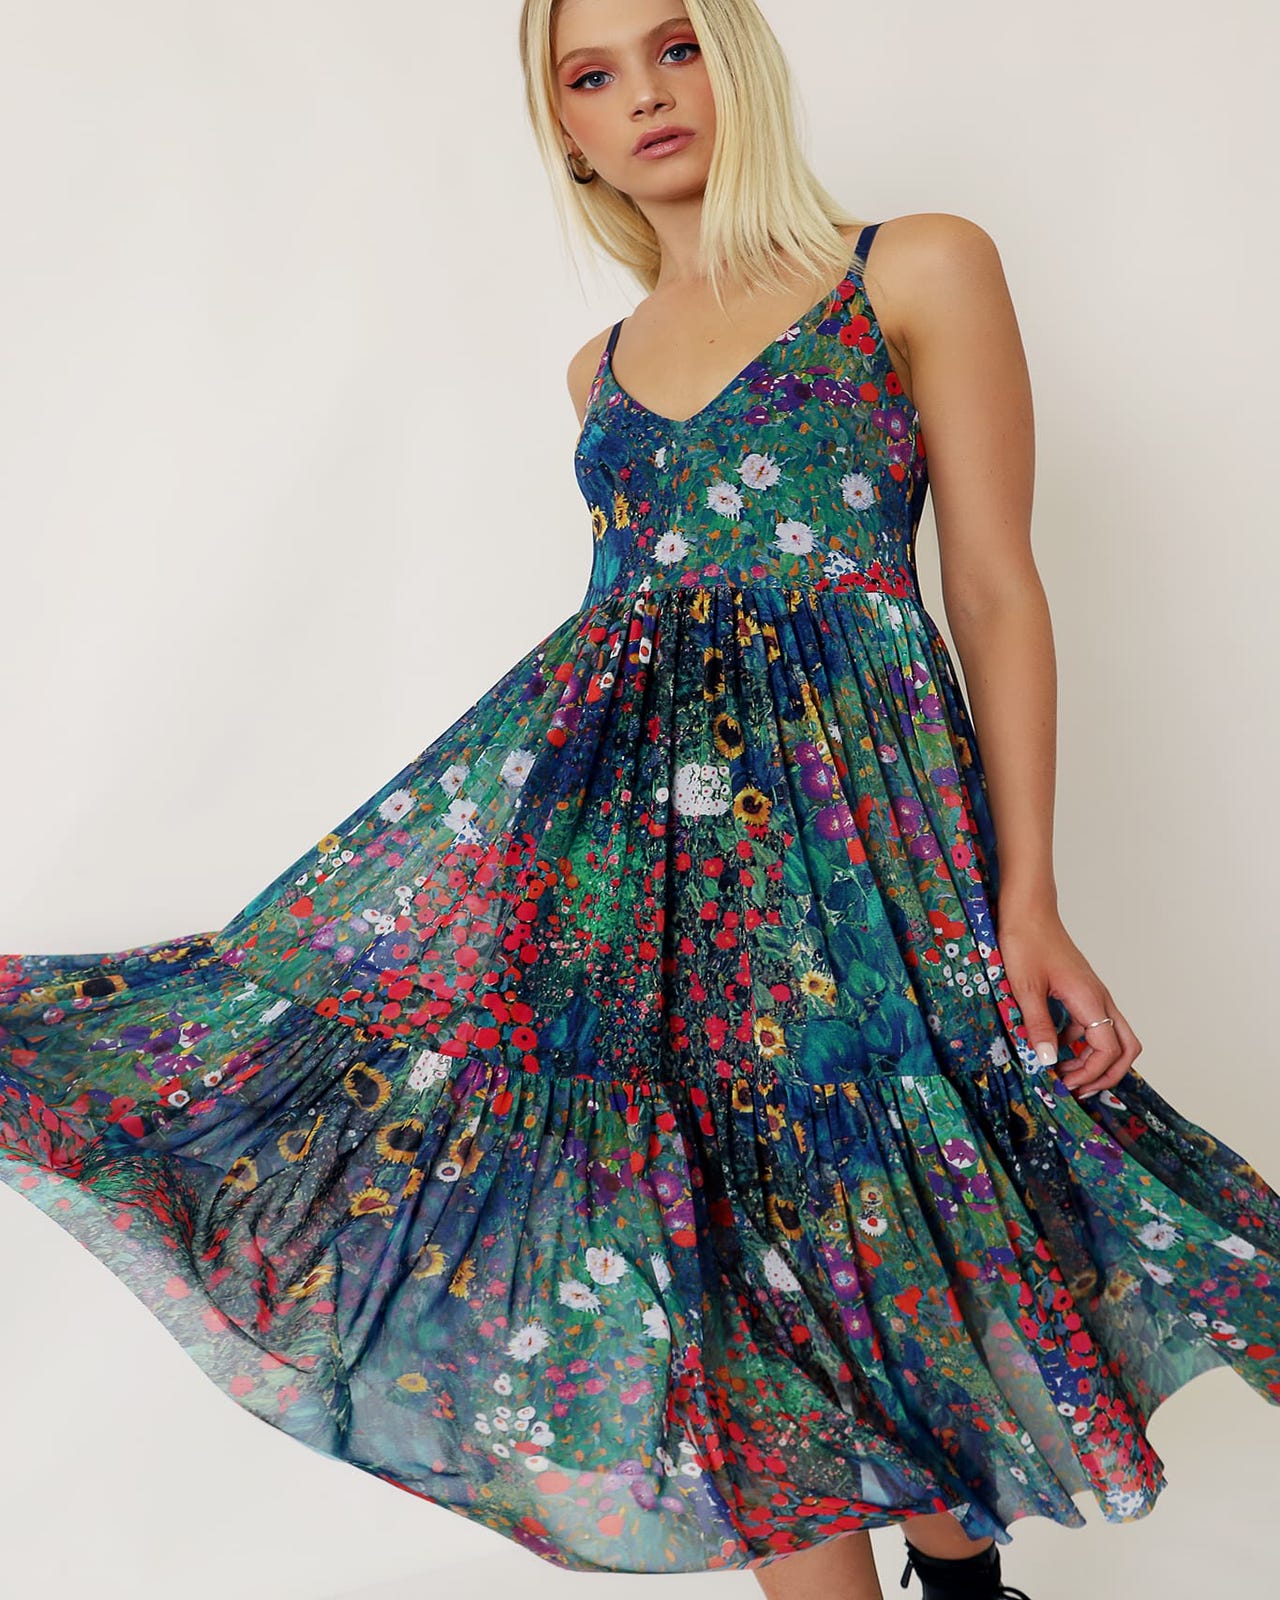 Klimt Collage Sheer Midaxi Dress - Limited